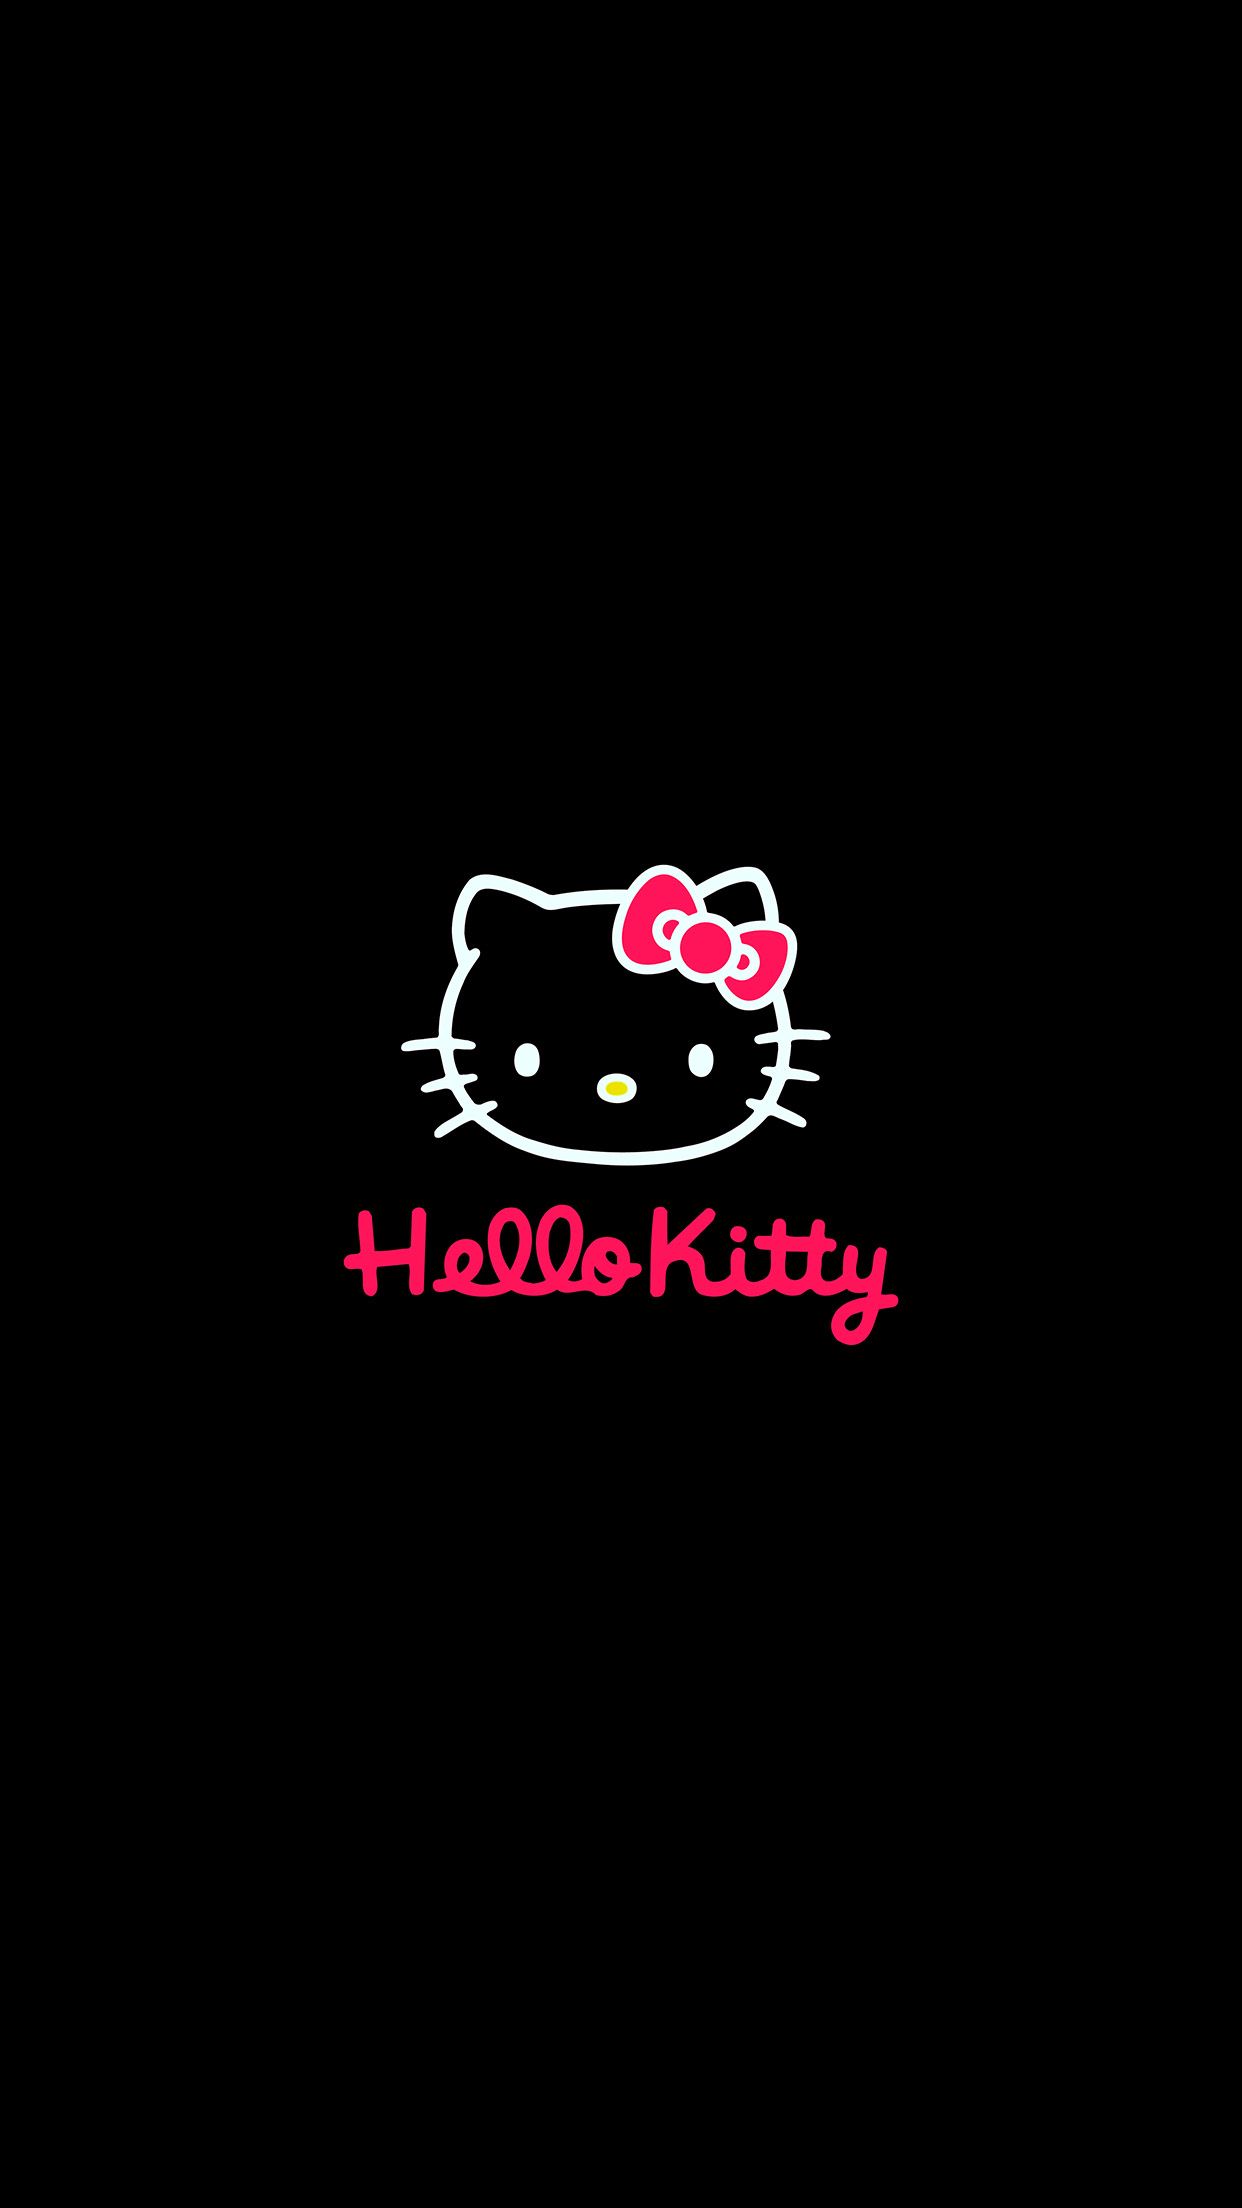 Hello kitty logo art cute dark Download Free HD Wallpaper